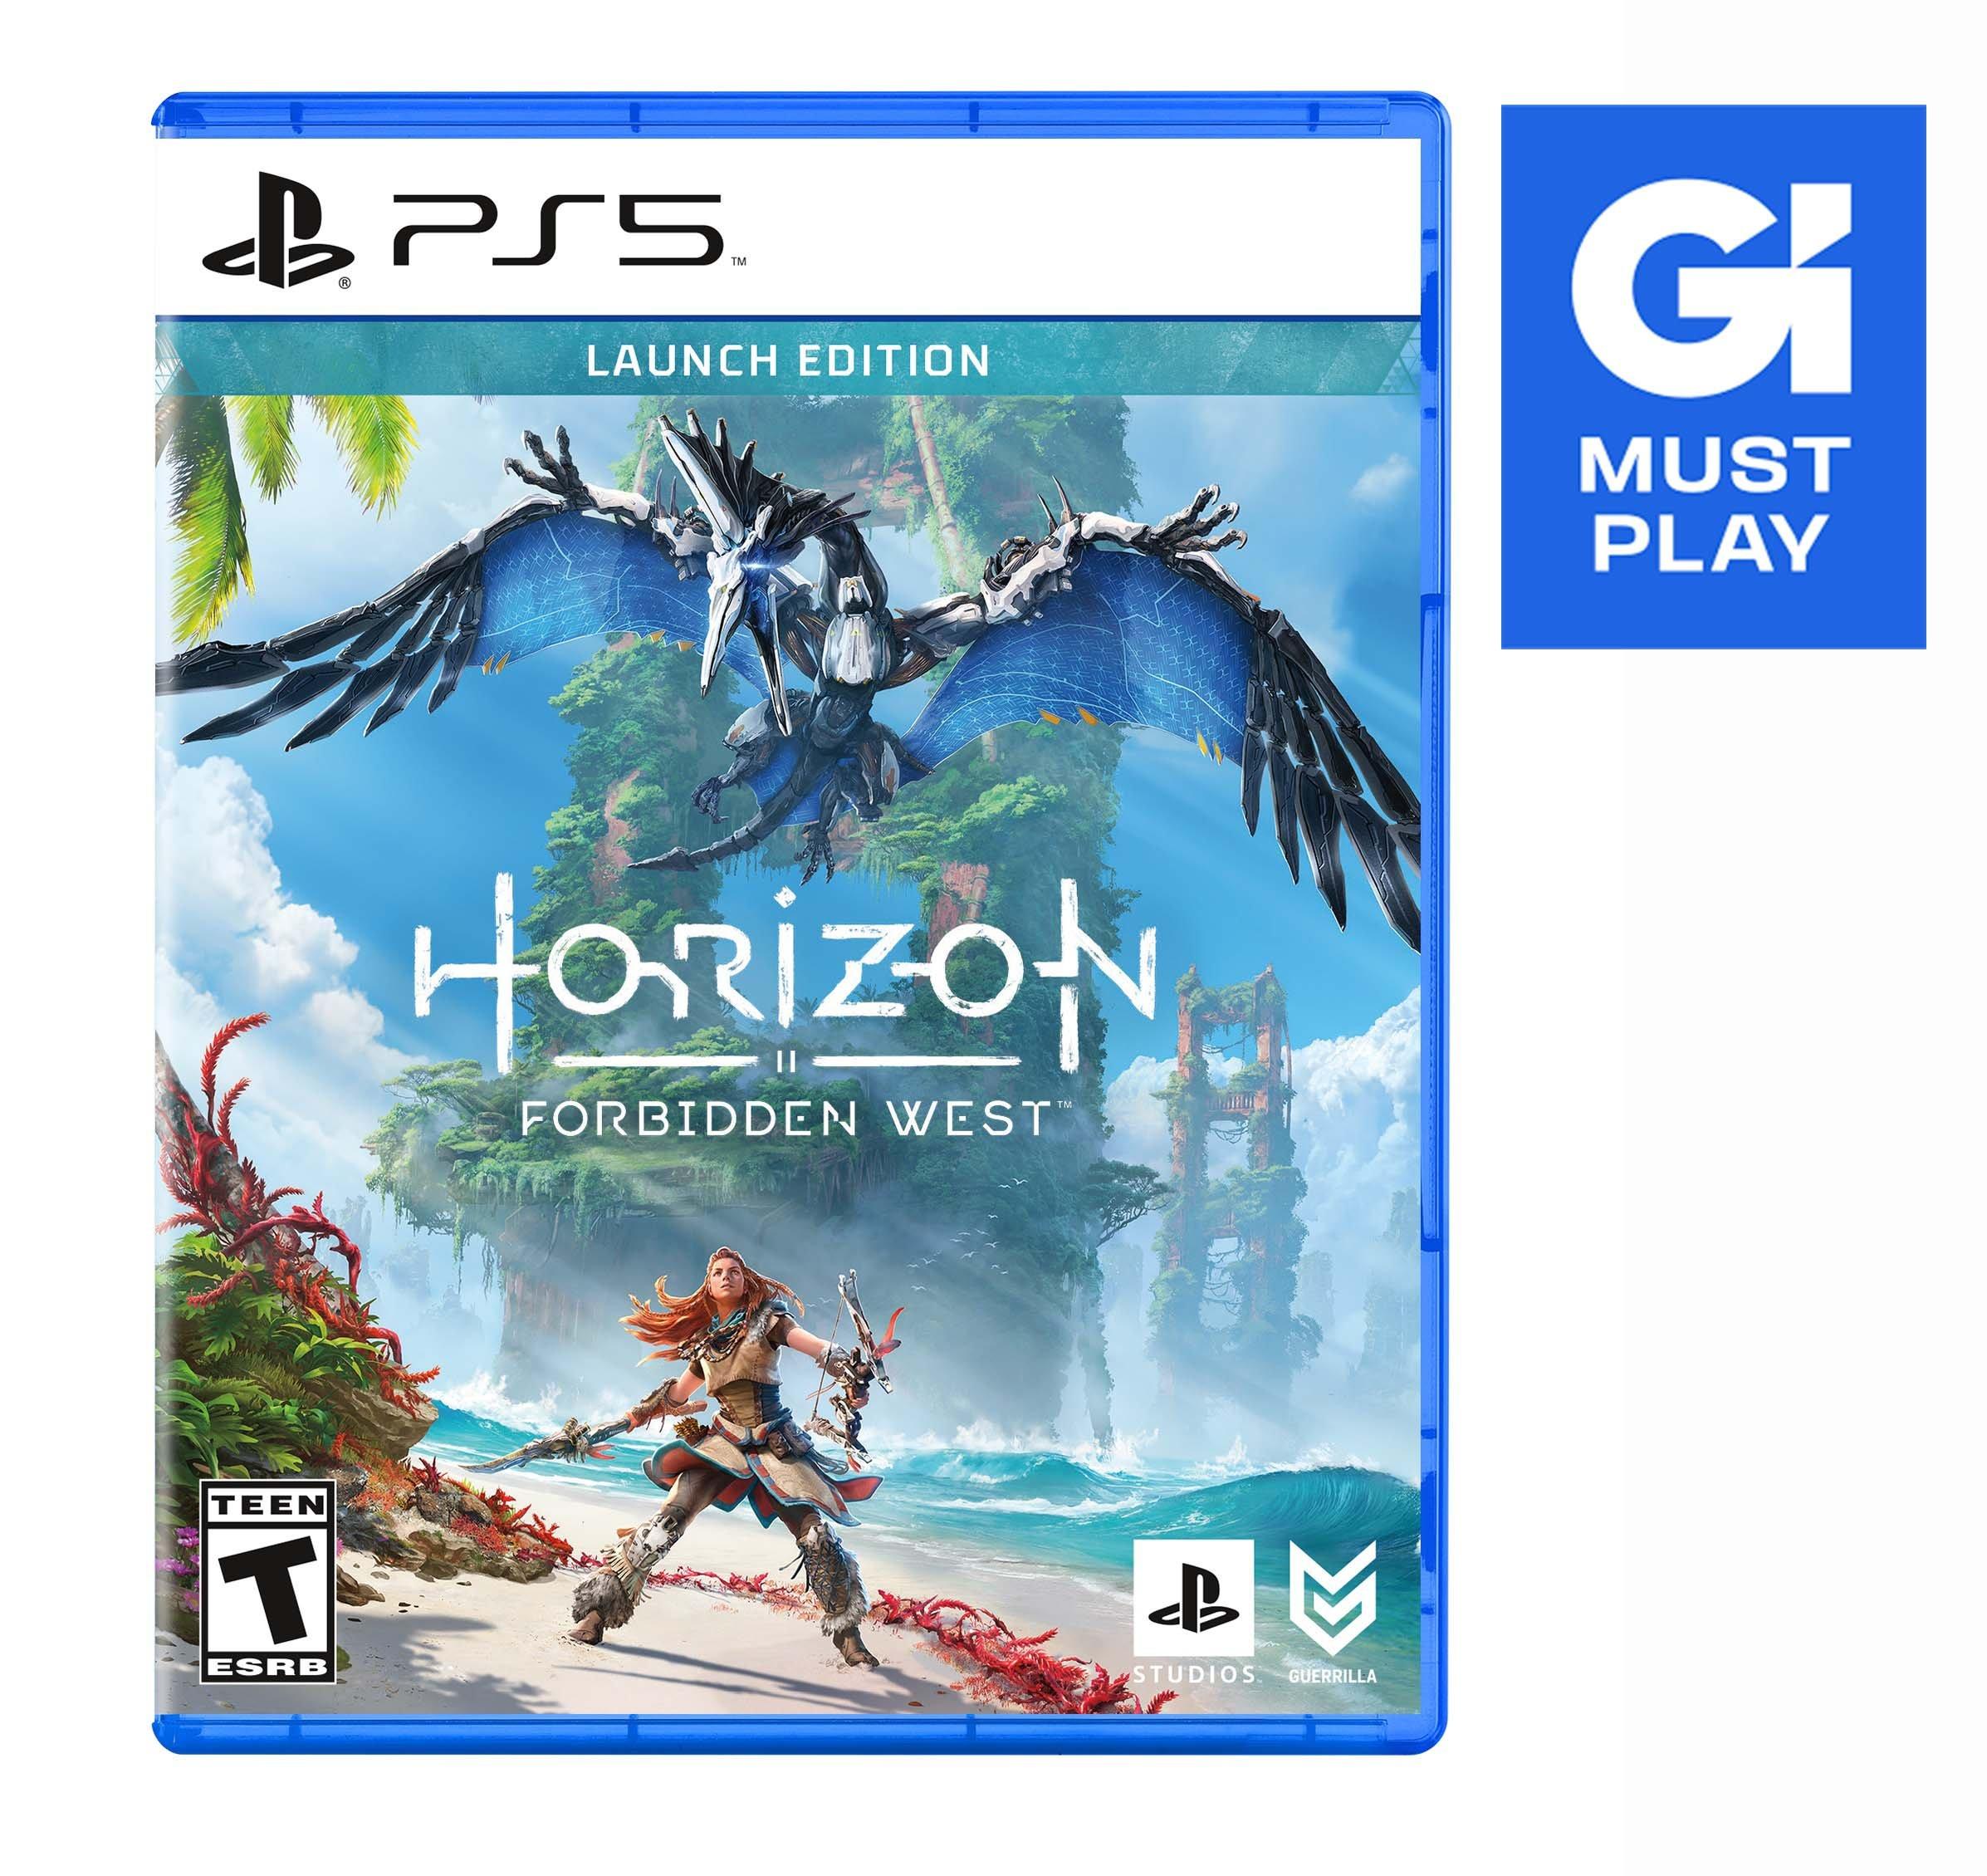 Horizon Forbidden West - Launch Edition - PlayStation 4